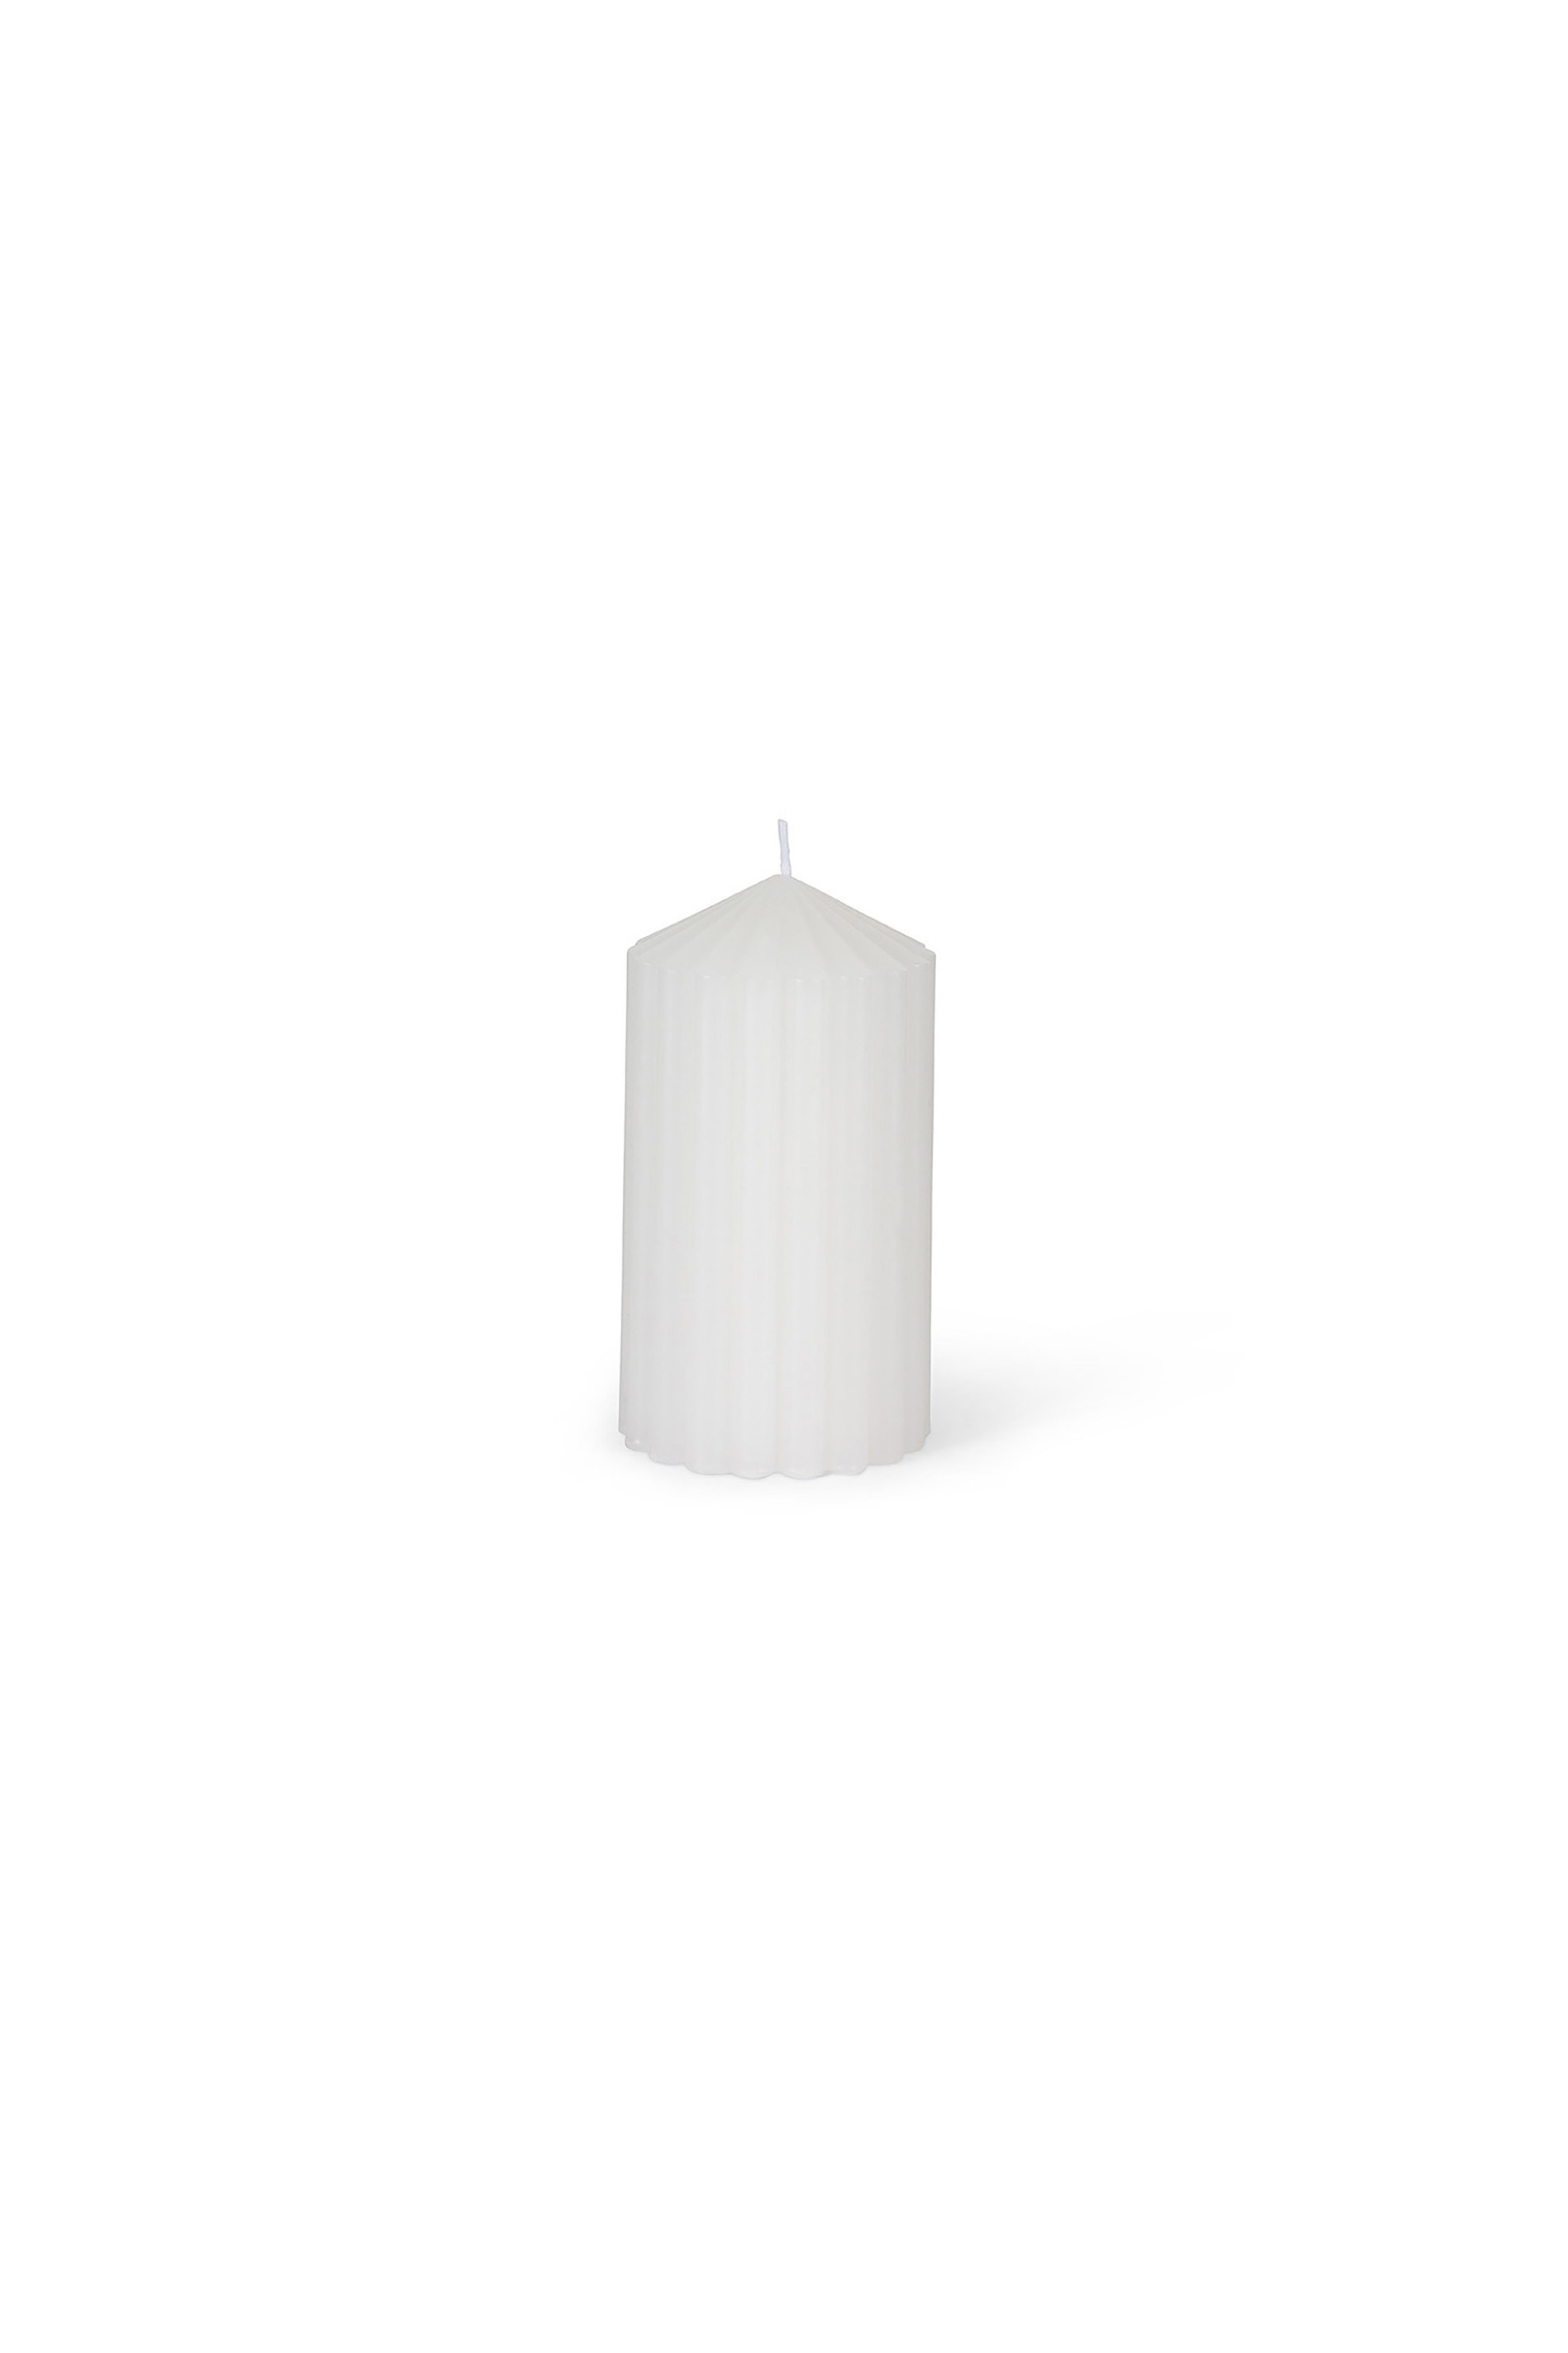 Home > ΔΙΑΚΟΣΜΗΣΗ > Διακοσμητικά Χώρου Coincasa διακοσμητικό κερί με ανάγλυφες ρίγες 12 x 7 cm - 007269185 Λευκό